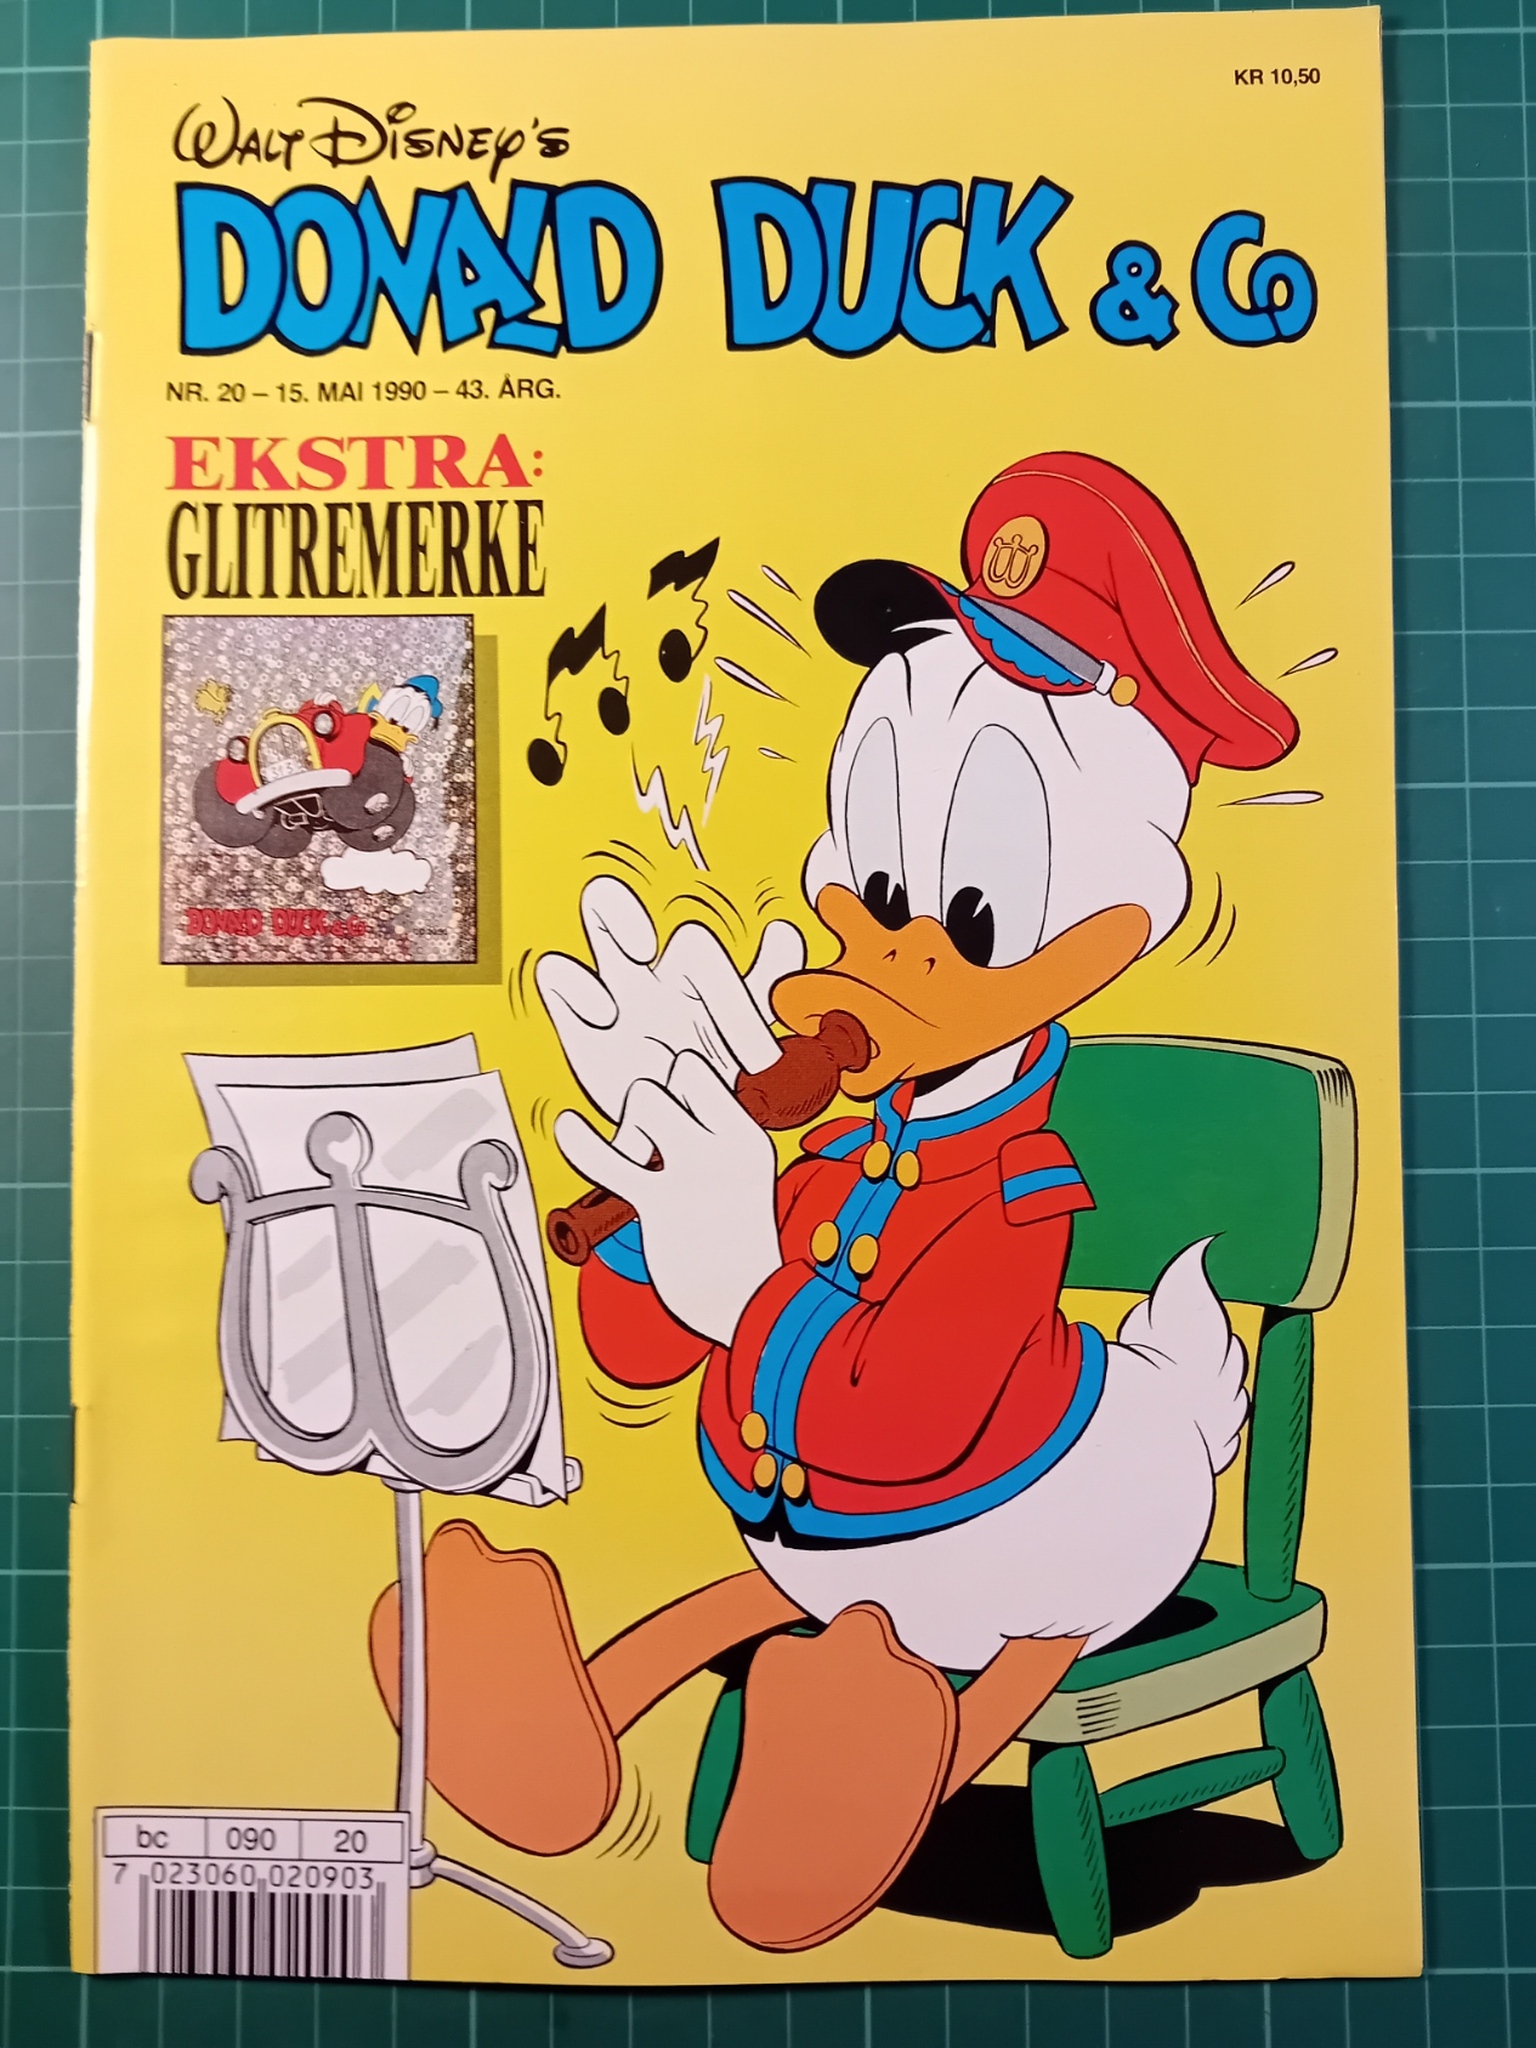 Donald Duck & Co 1990 - 20 m/glitremerke